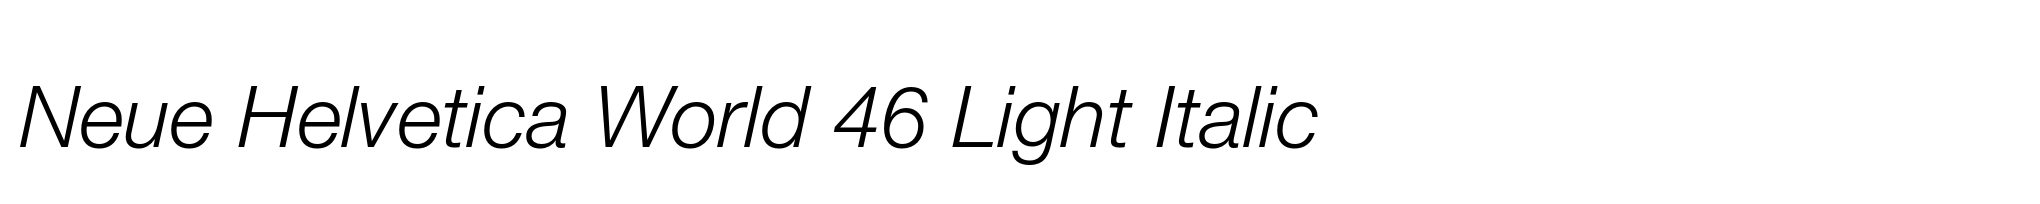 Neue Helvetica World 46 Light Italic image